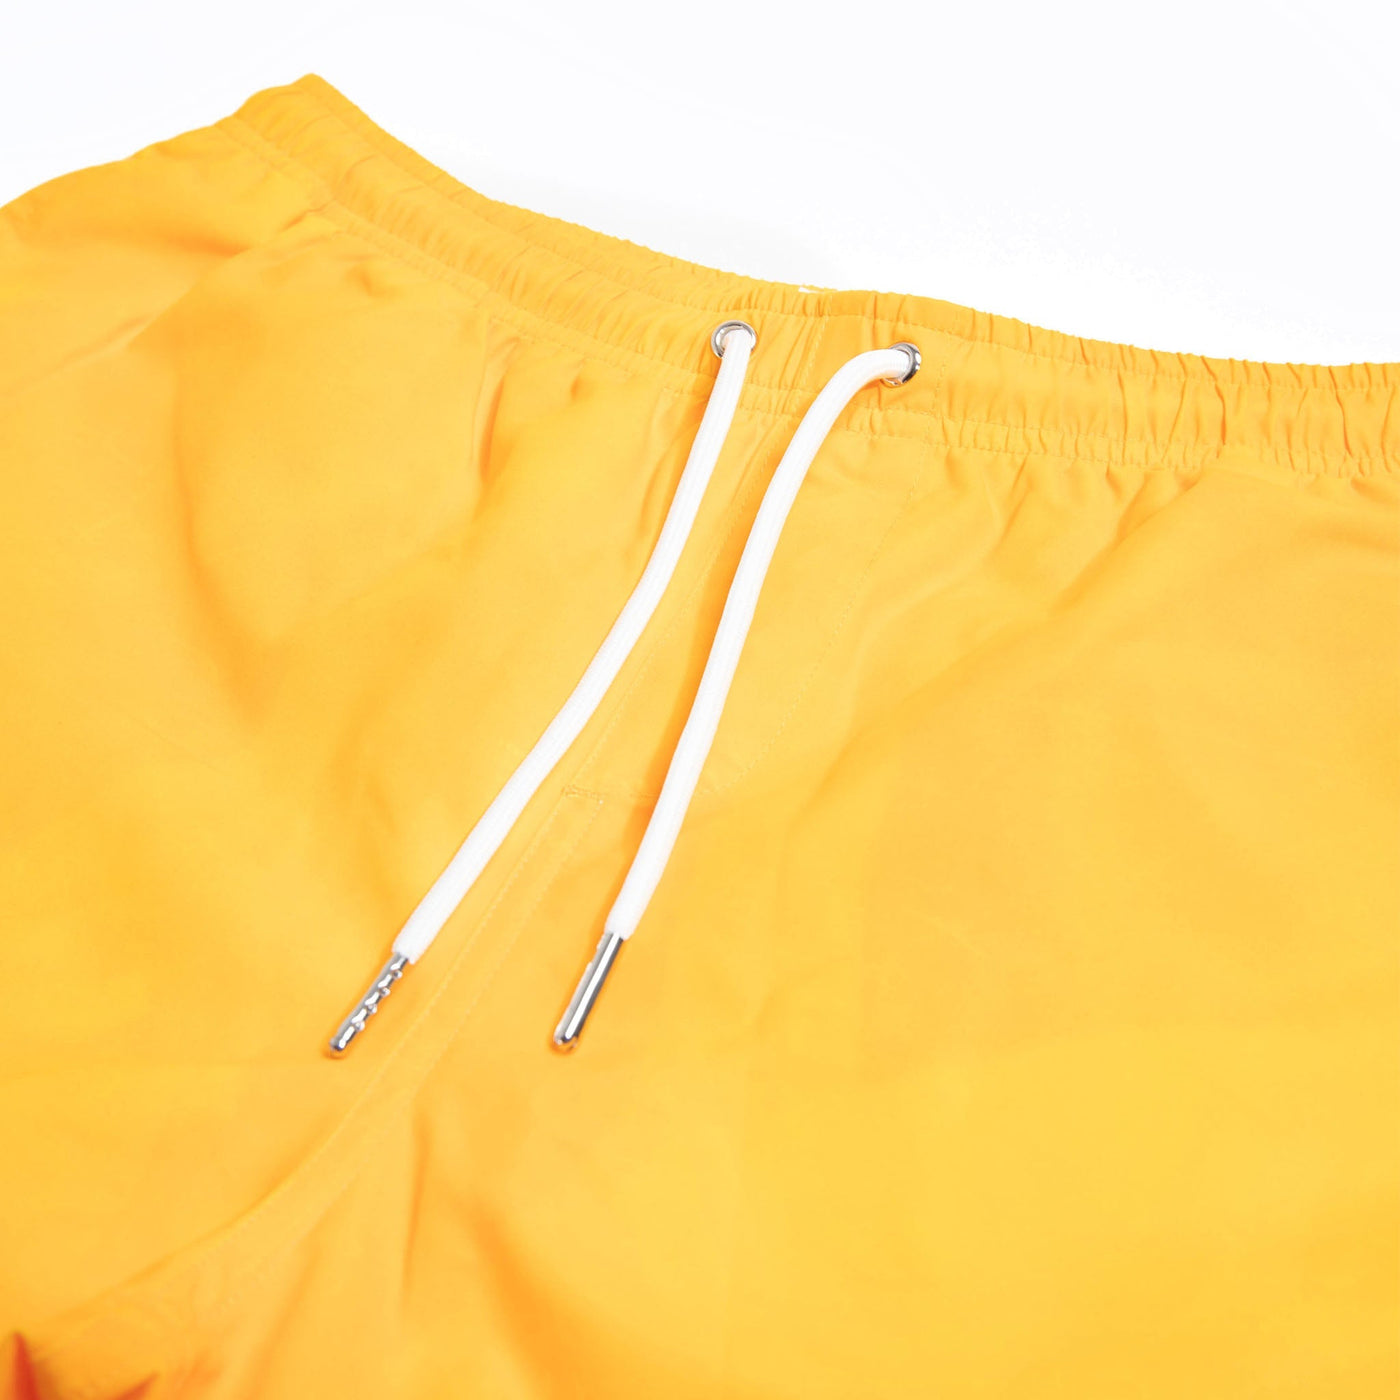 Yellow to Orange - 5" Swim Trunks + Color Changing by Bermies Swimwear